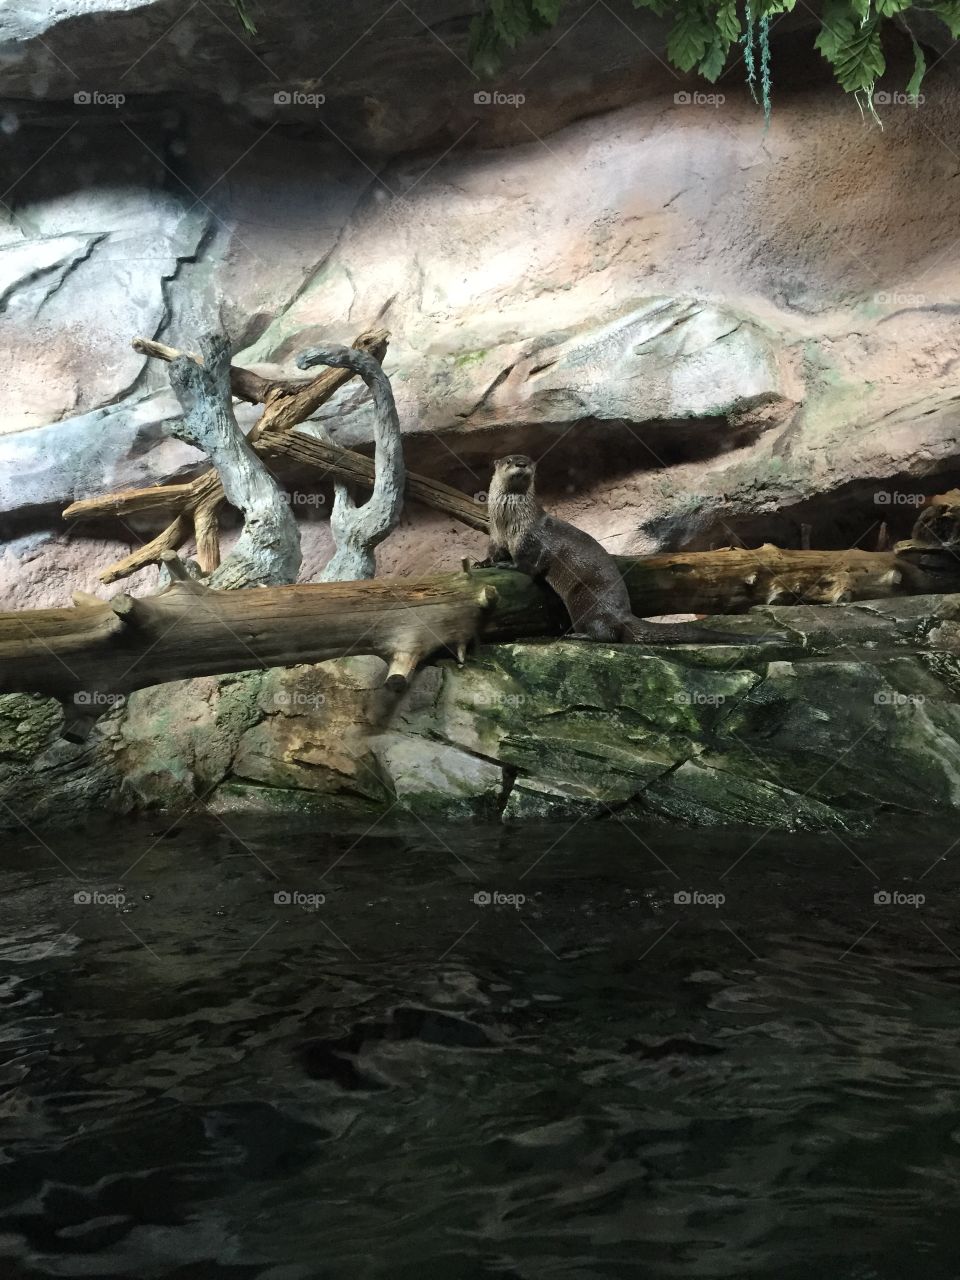 Sea otter on a log